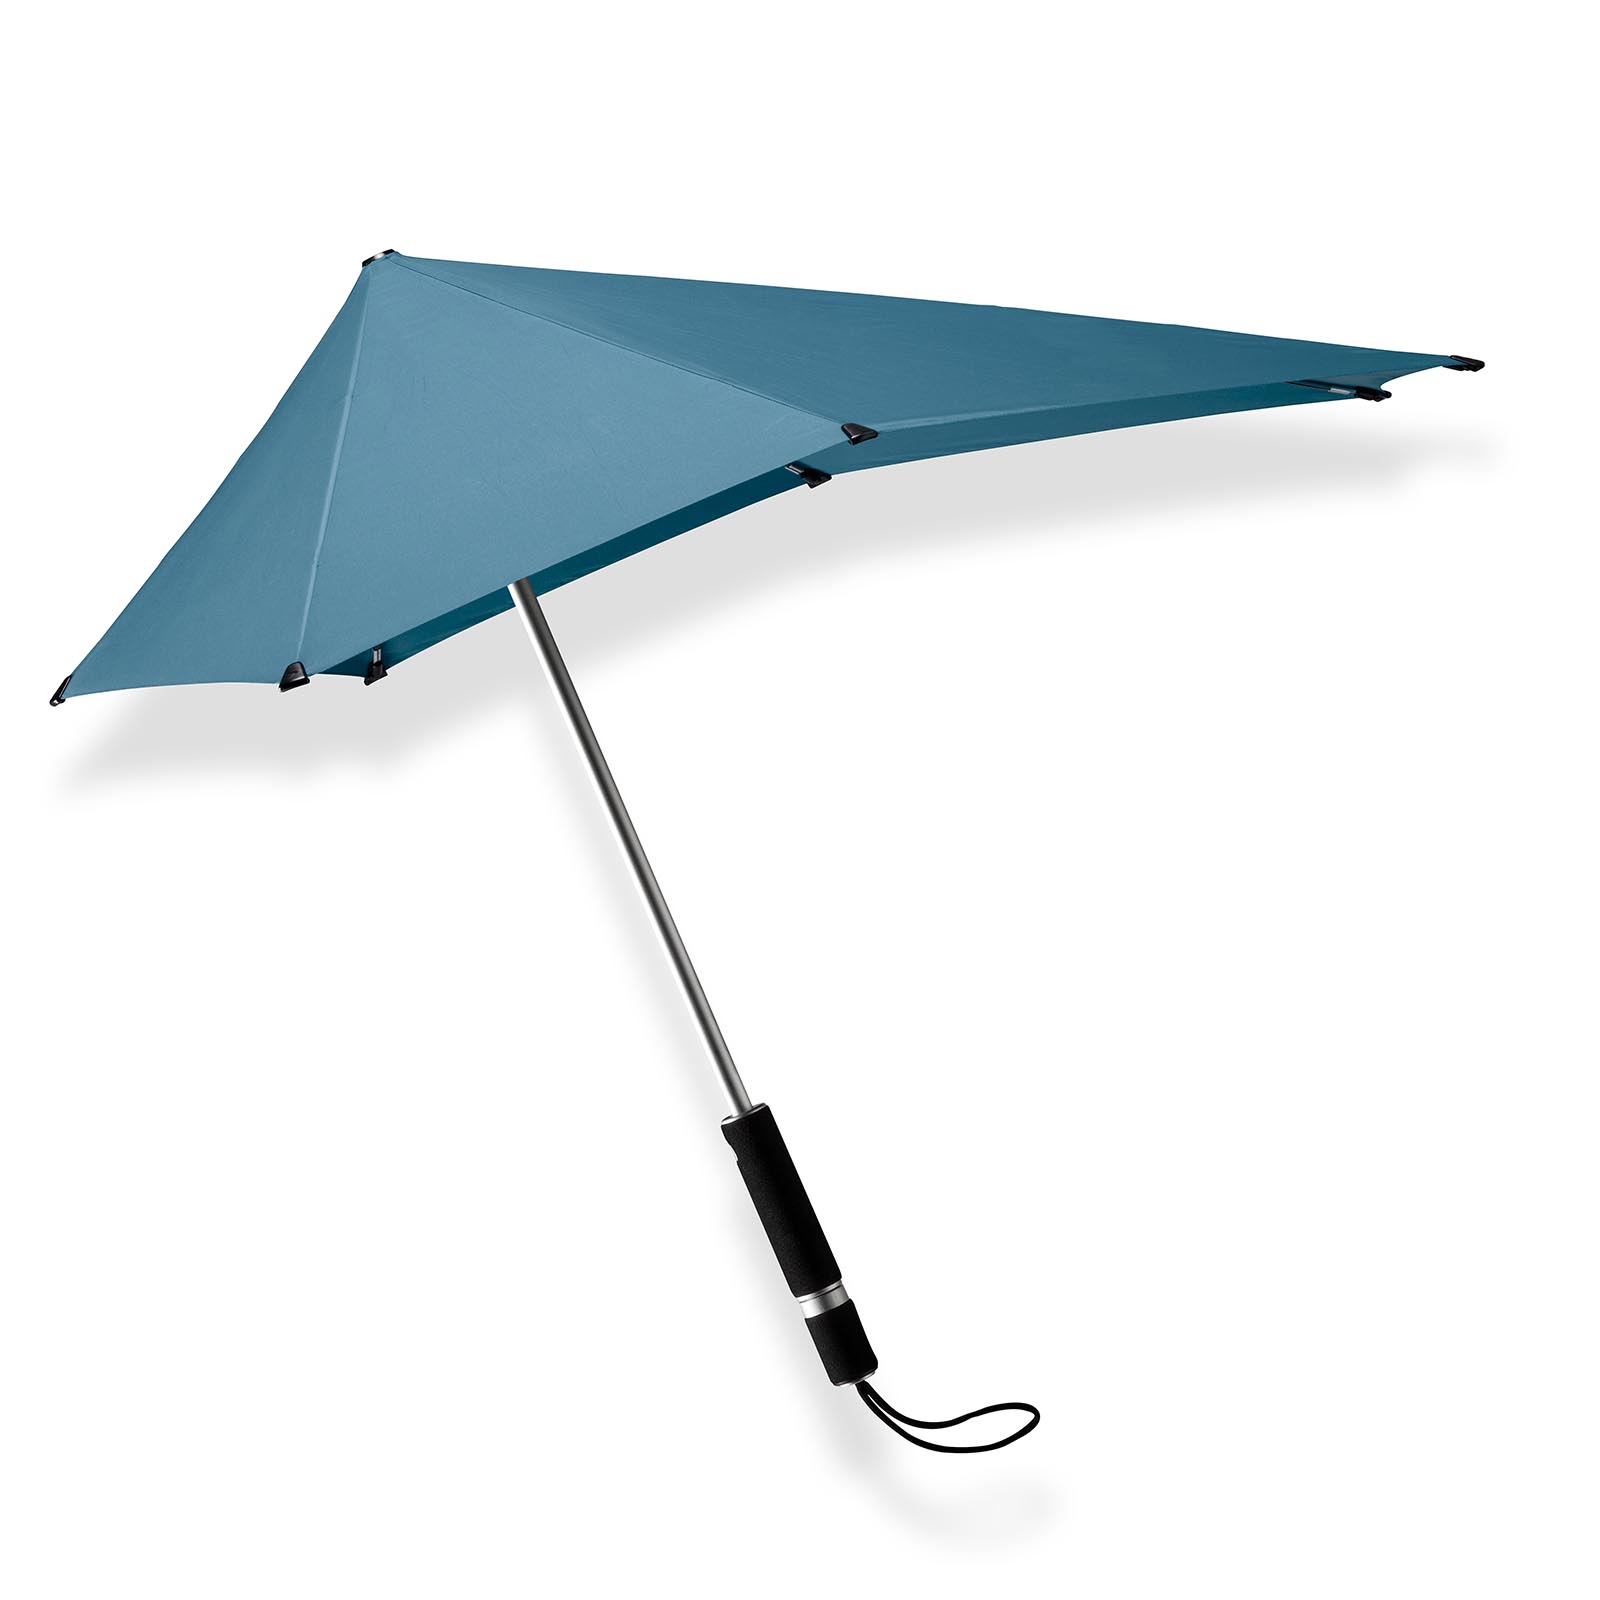 Regulatie Effectief Trappenhuis Blauwe lange paraplu original kopen? senz° original spring lake blue